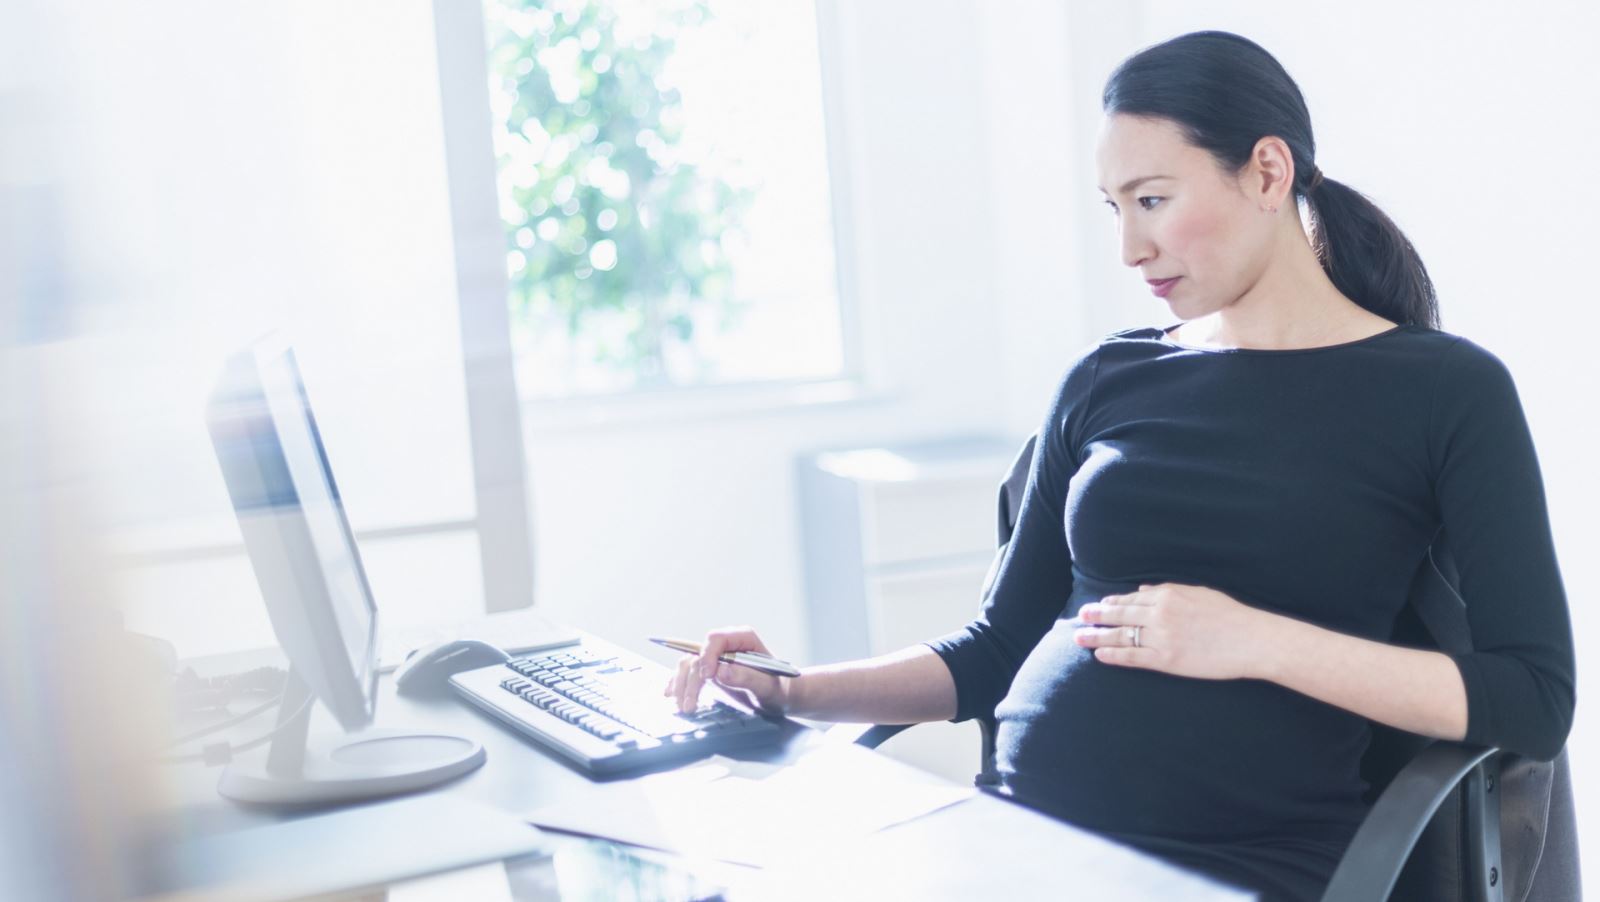 Female employees fear pregnancy prejudice